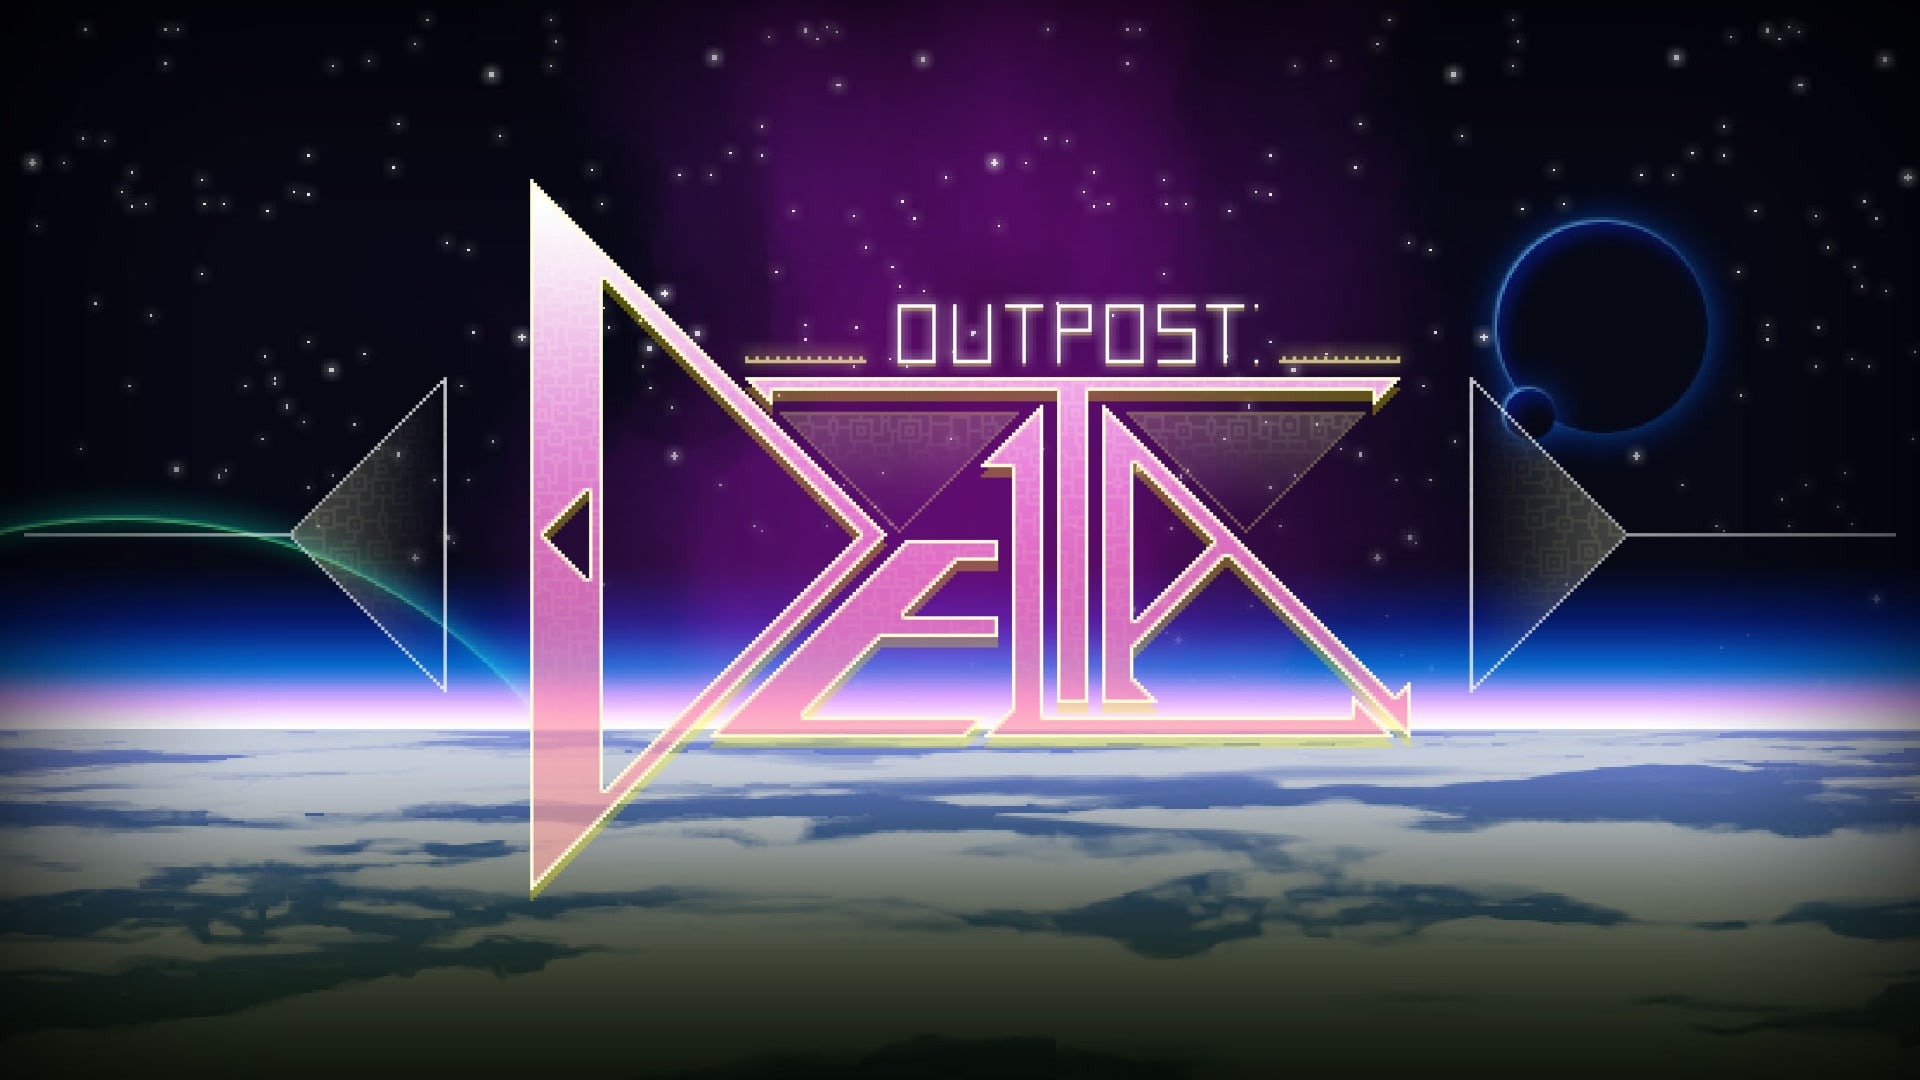 Outpost Delta 1